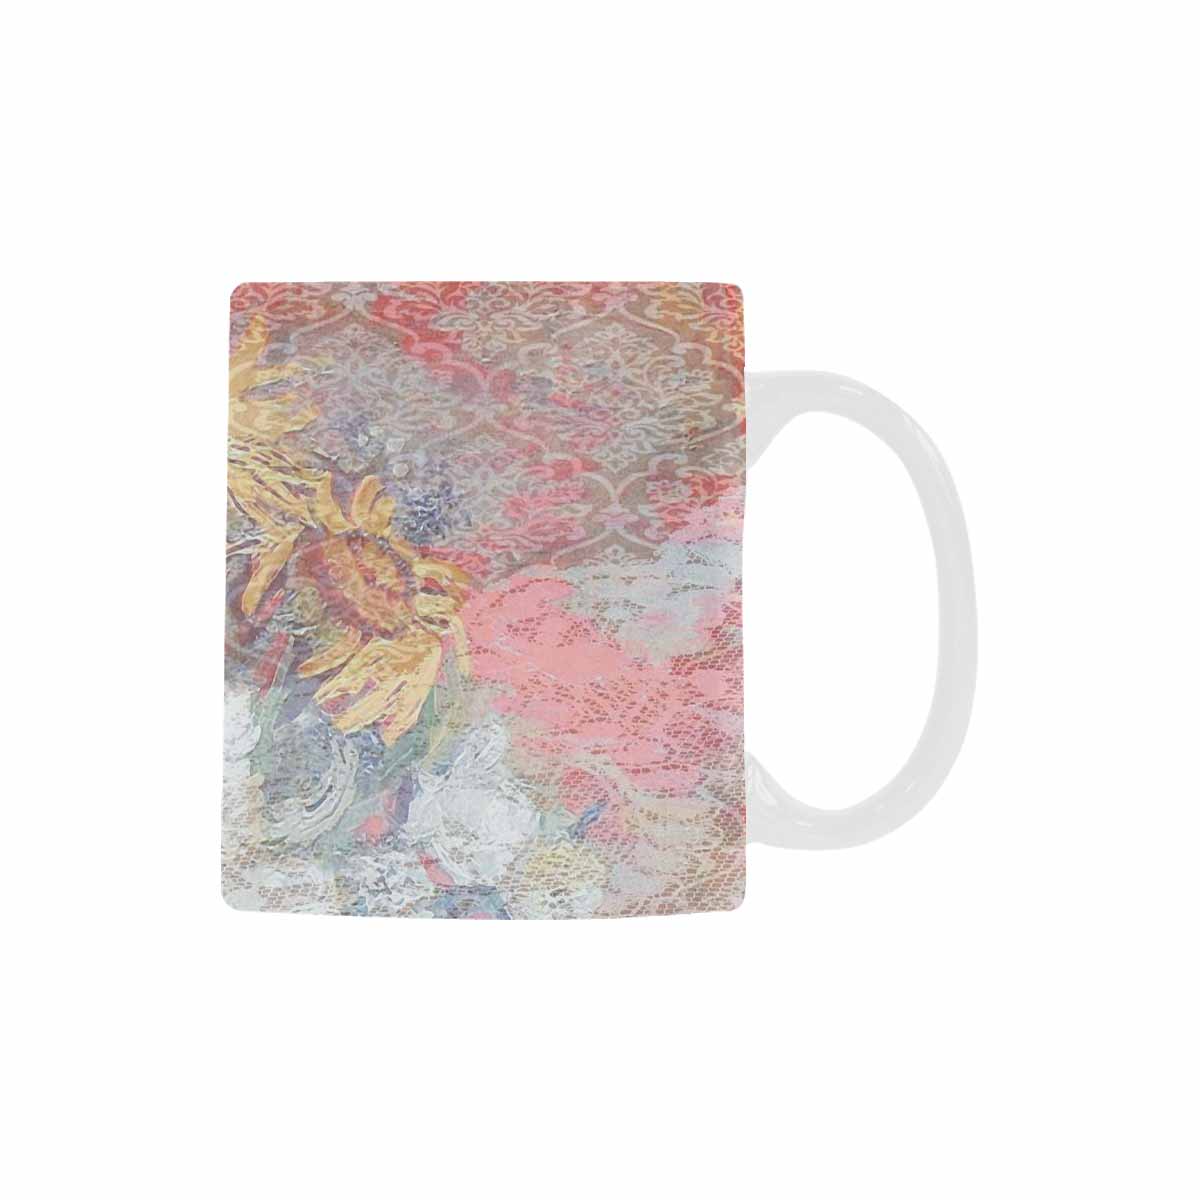 Vintage floral coffee mug or tea cup, Design 54x